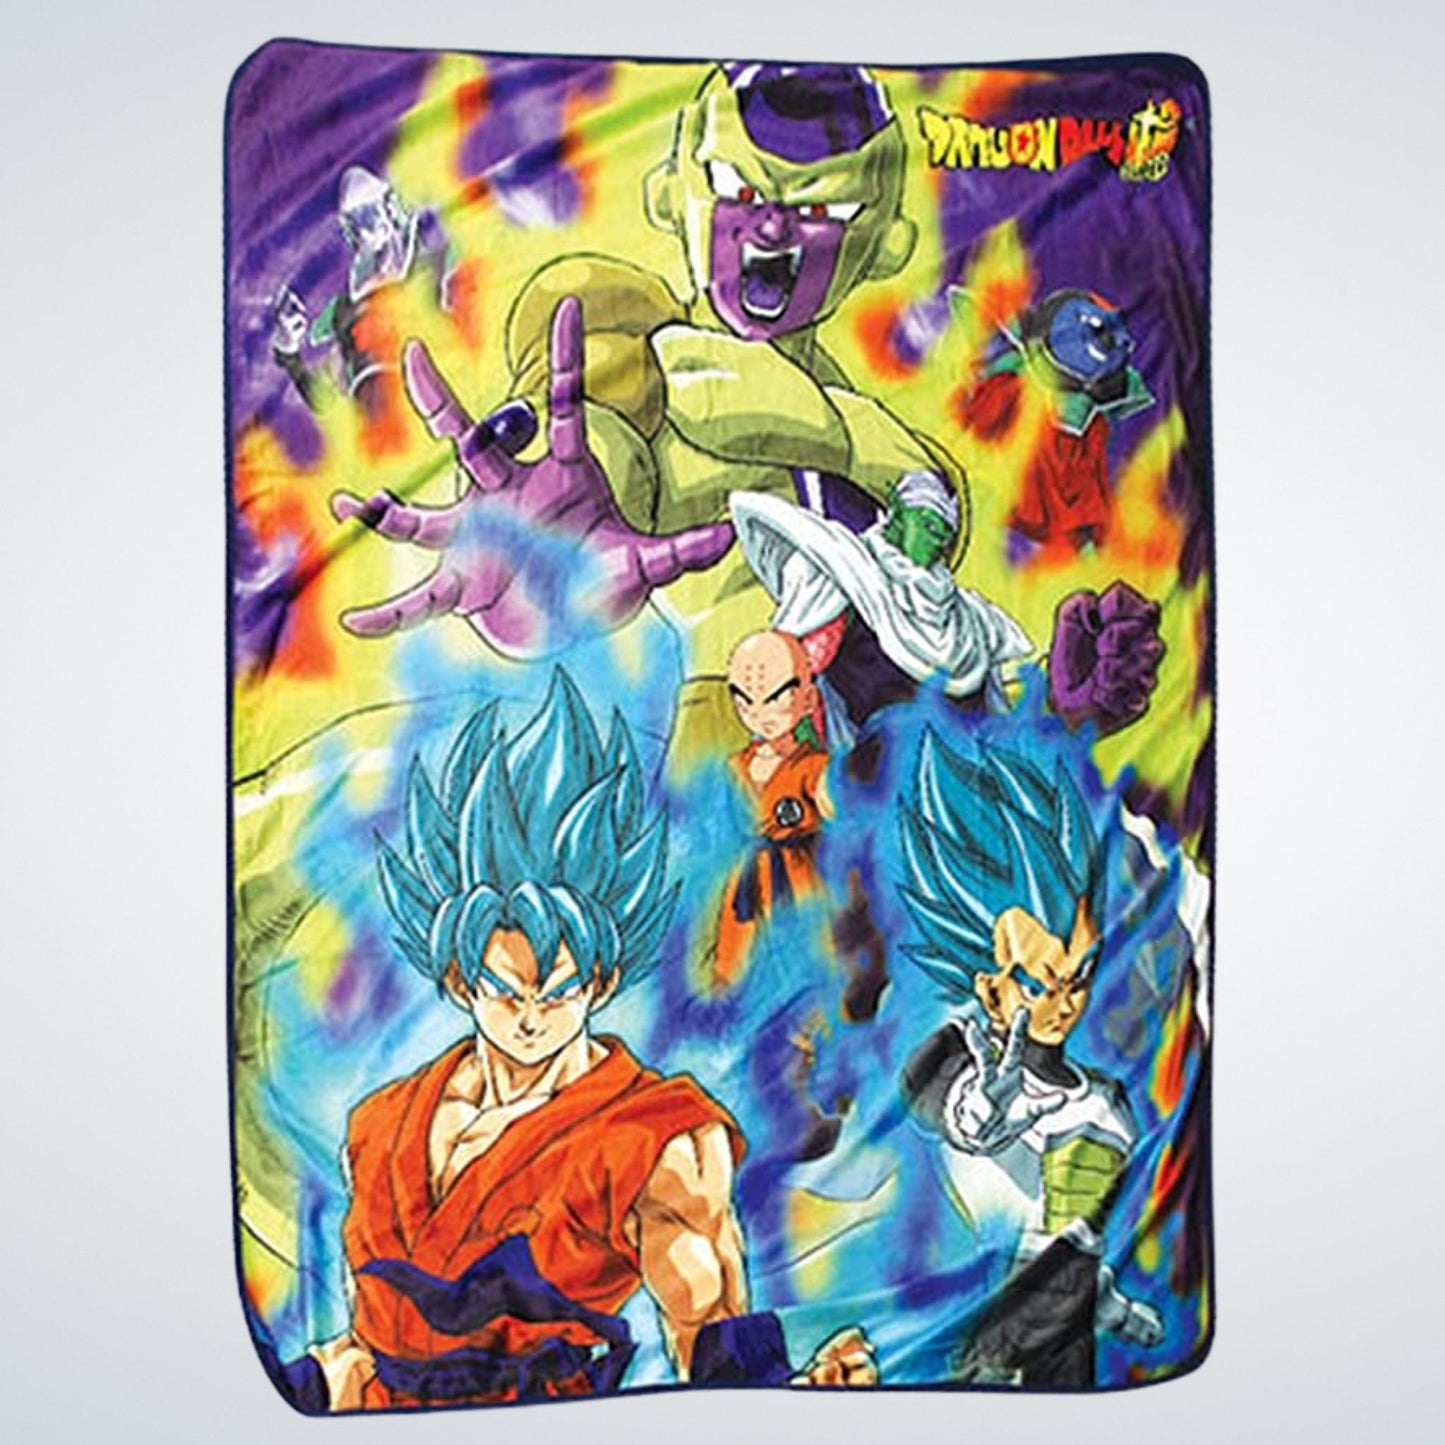 Goku and Vegeta Super Saiyan Blue (Dragon Ball Super) Throw Blanket